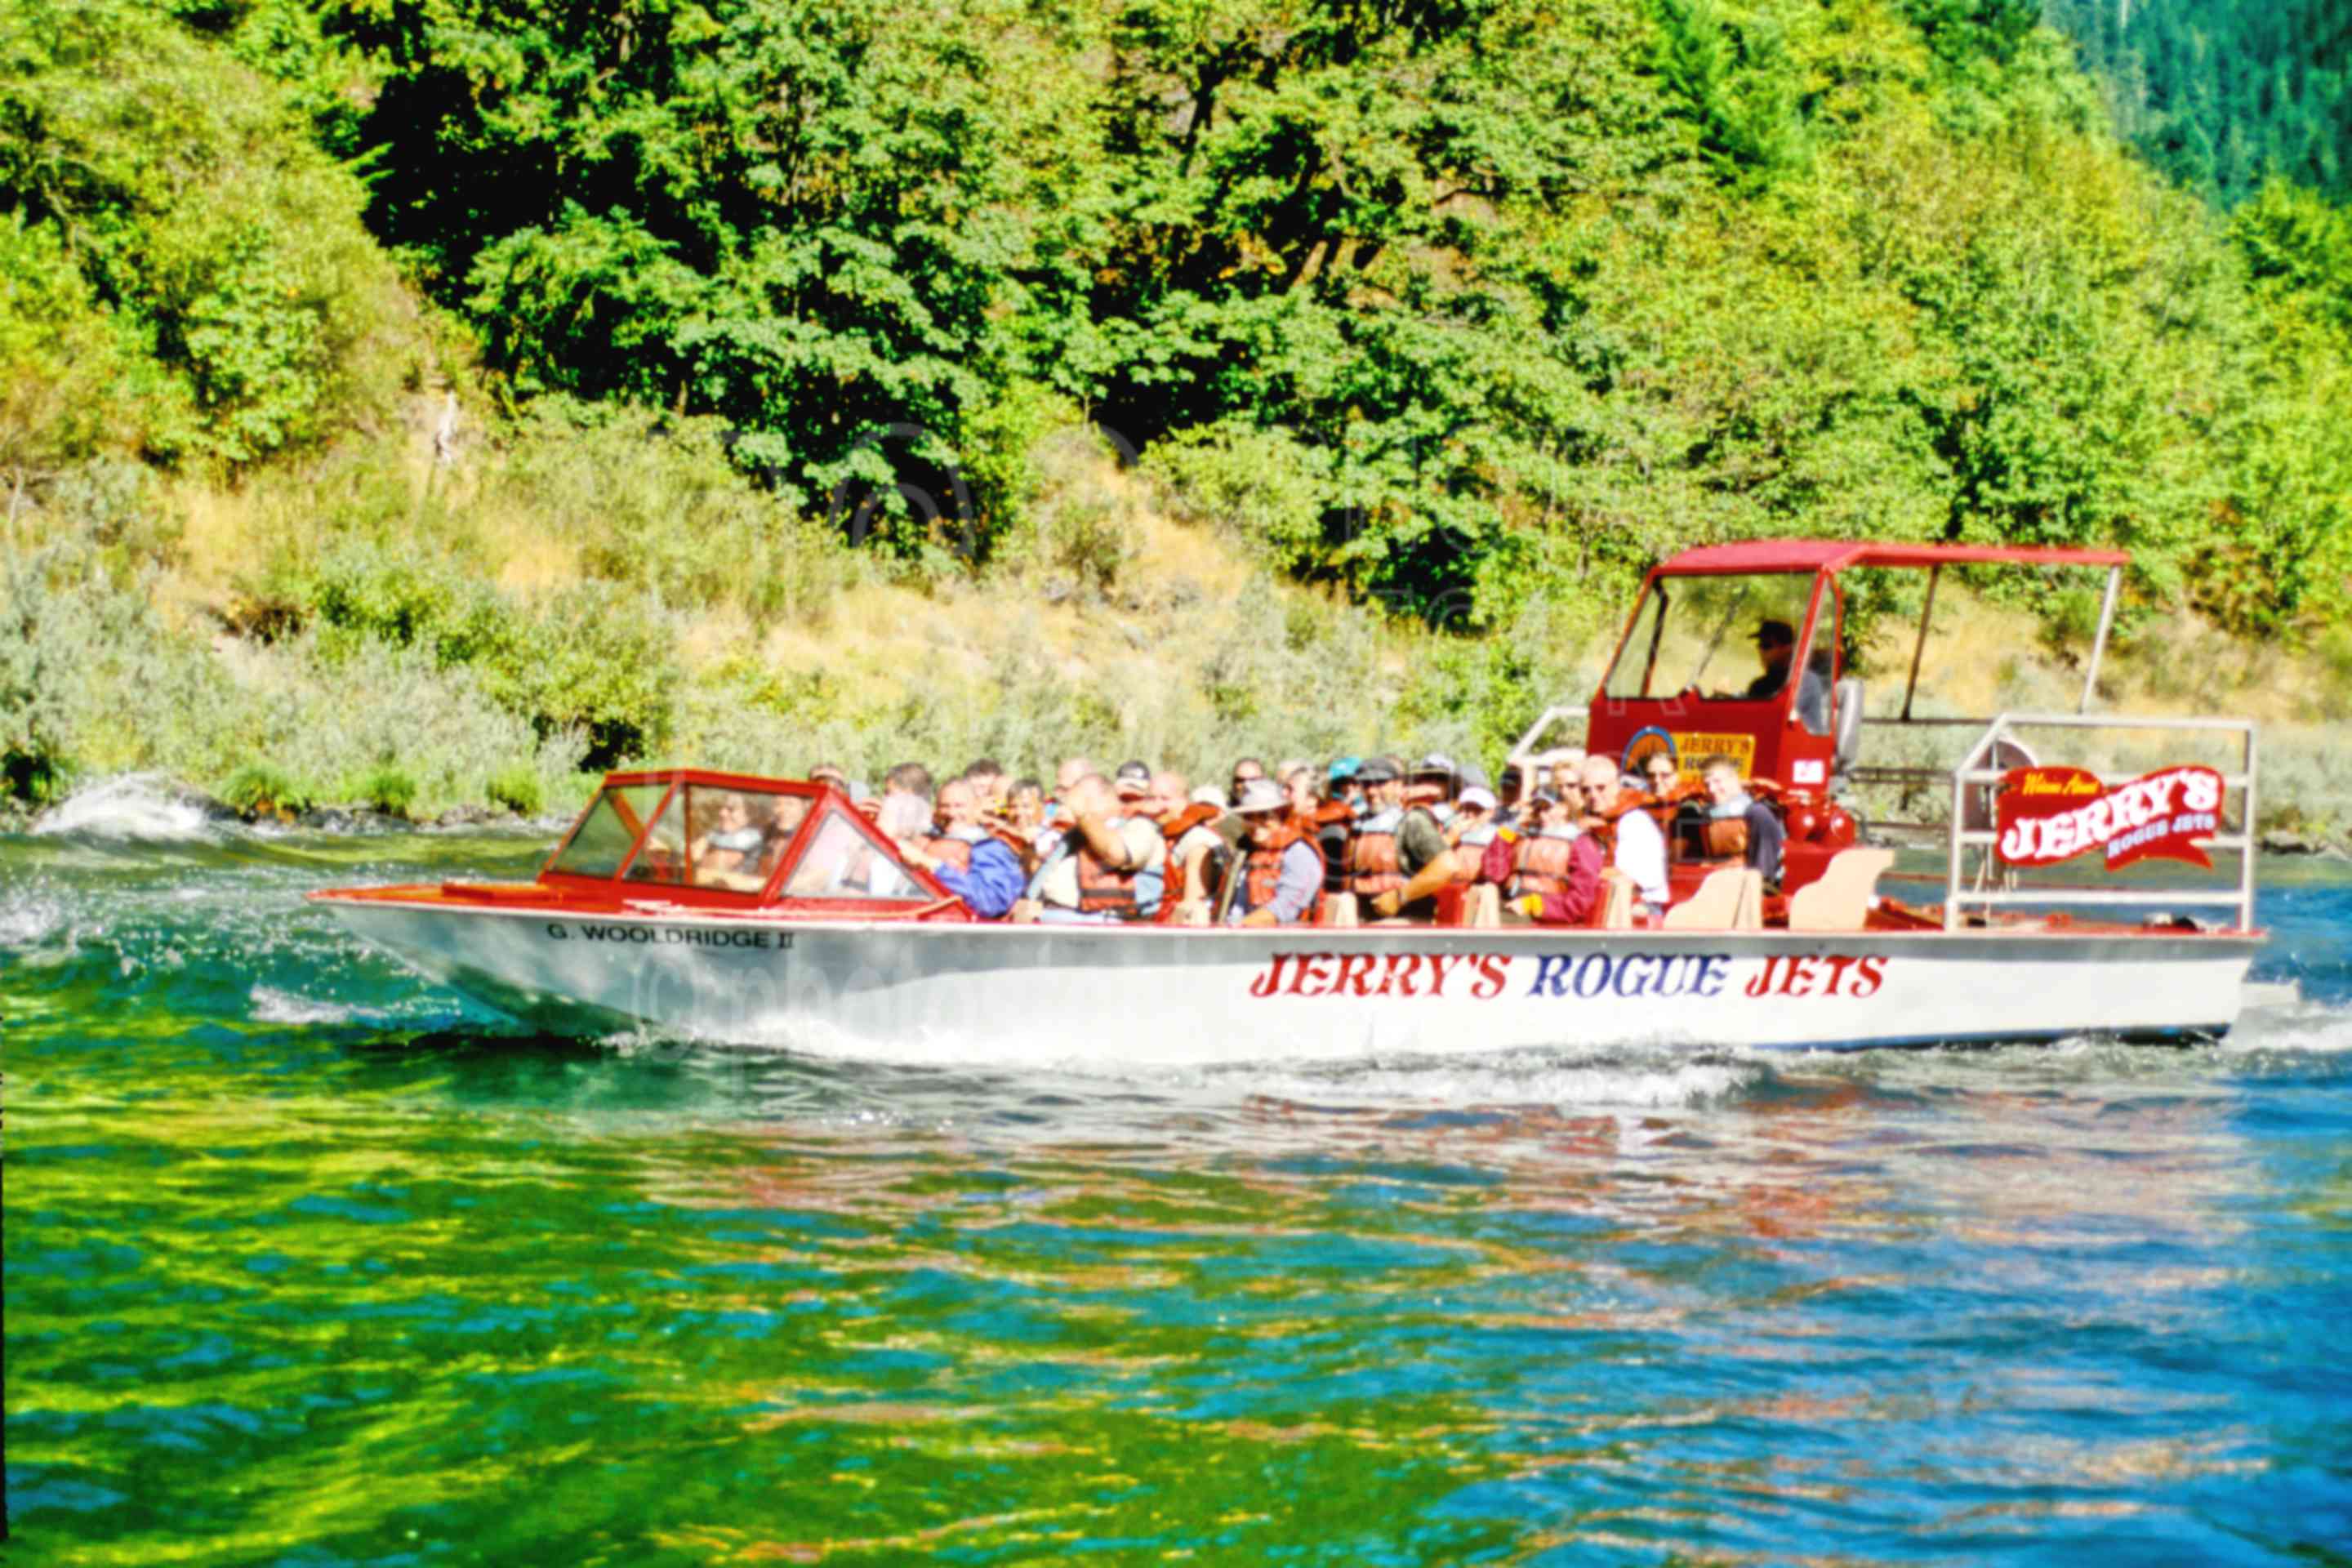 Rogue River Jet Boat,jet boat,rapids,river,usas,lakes rivers,boats